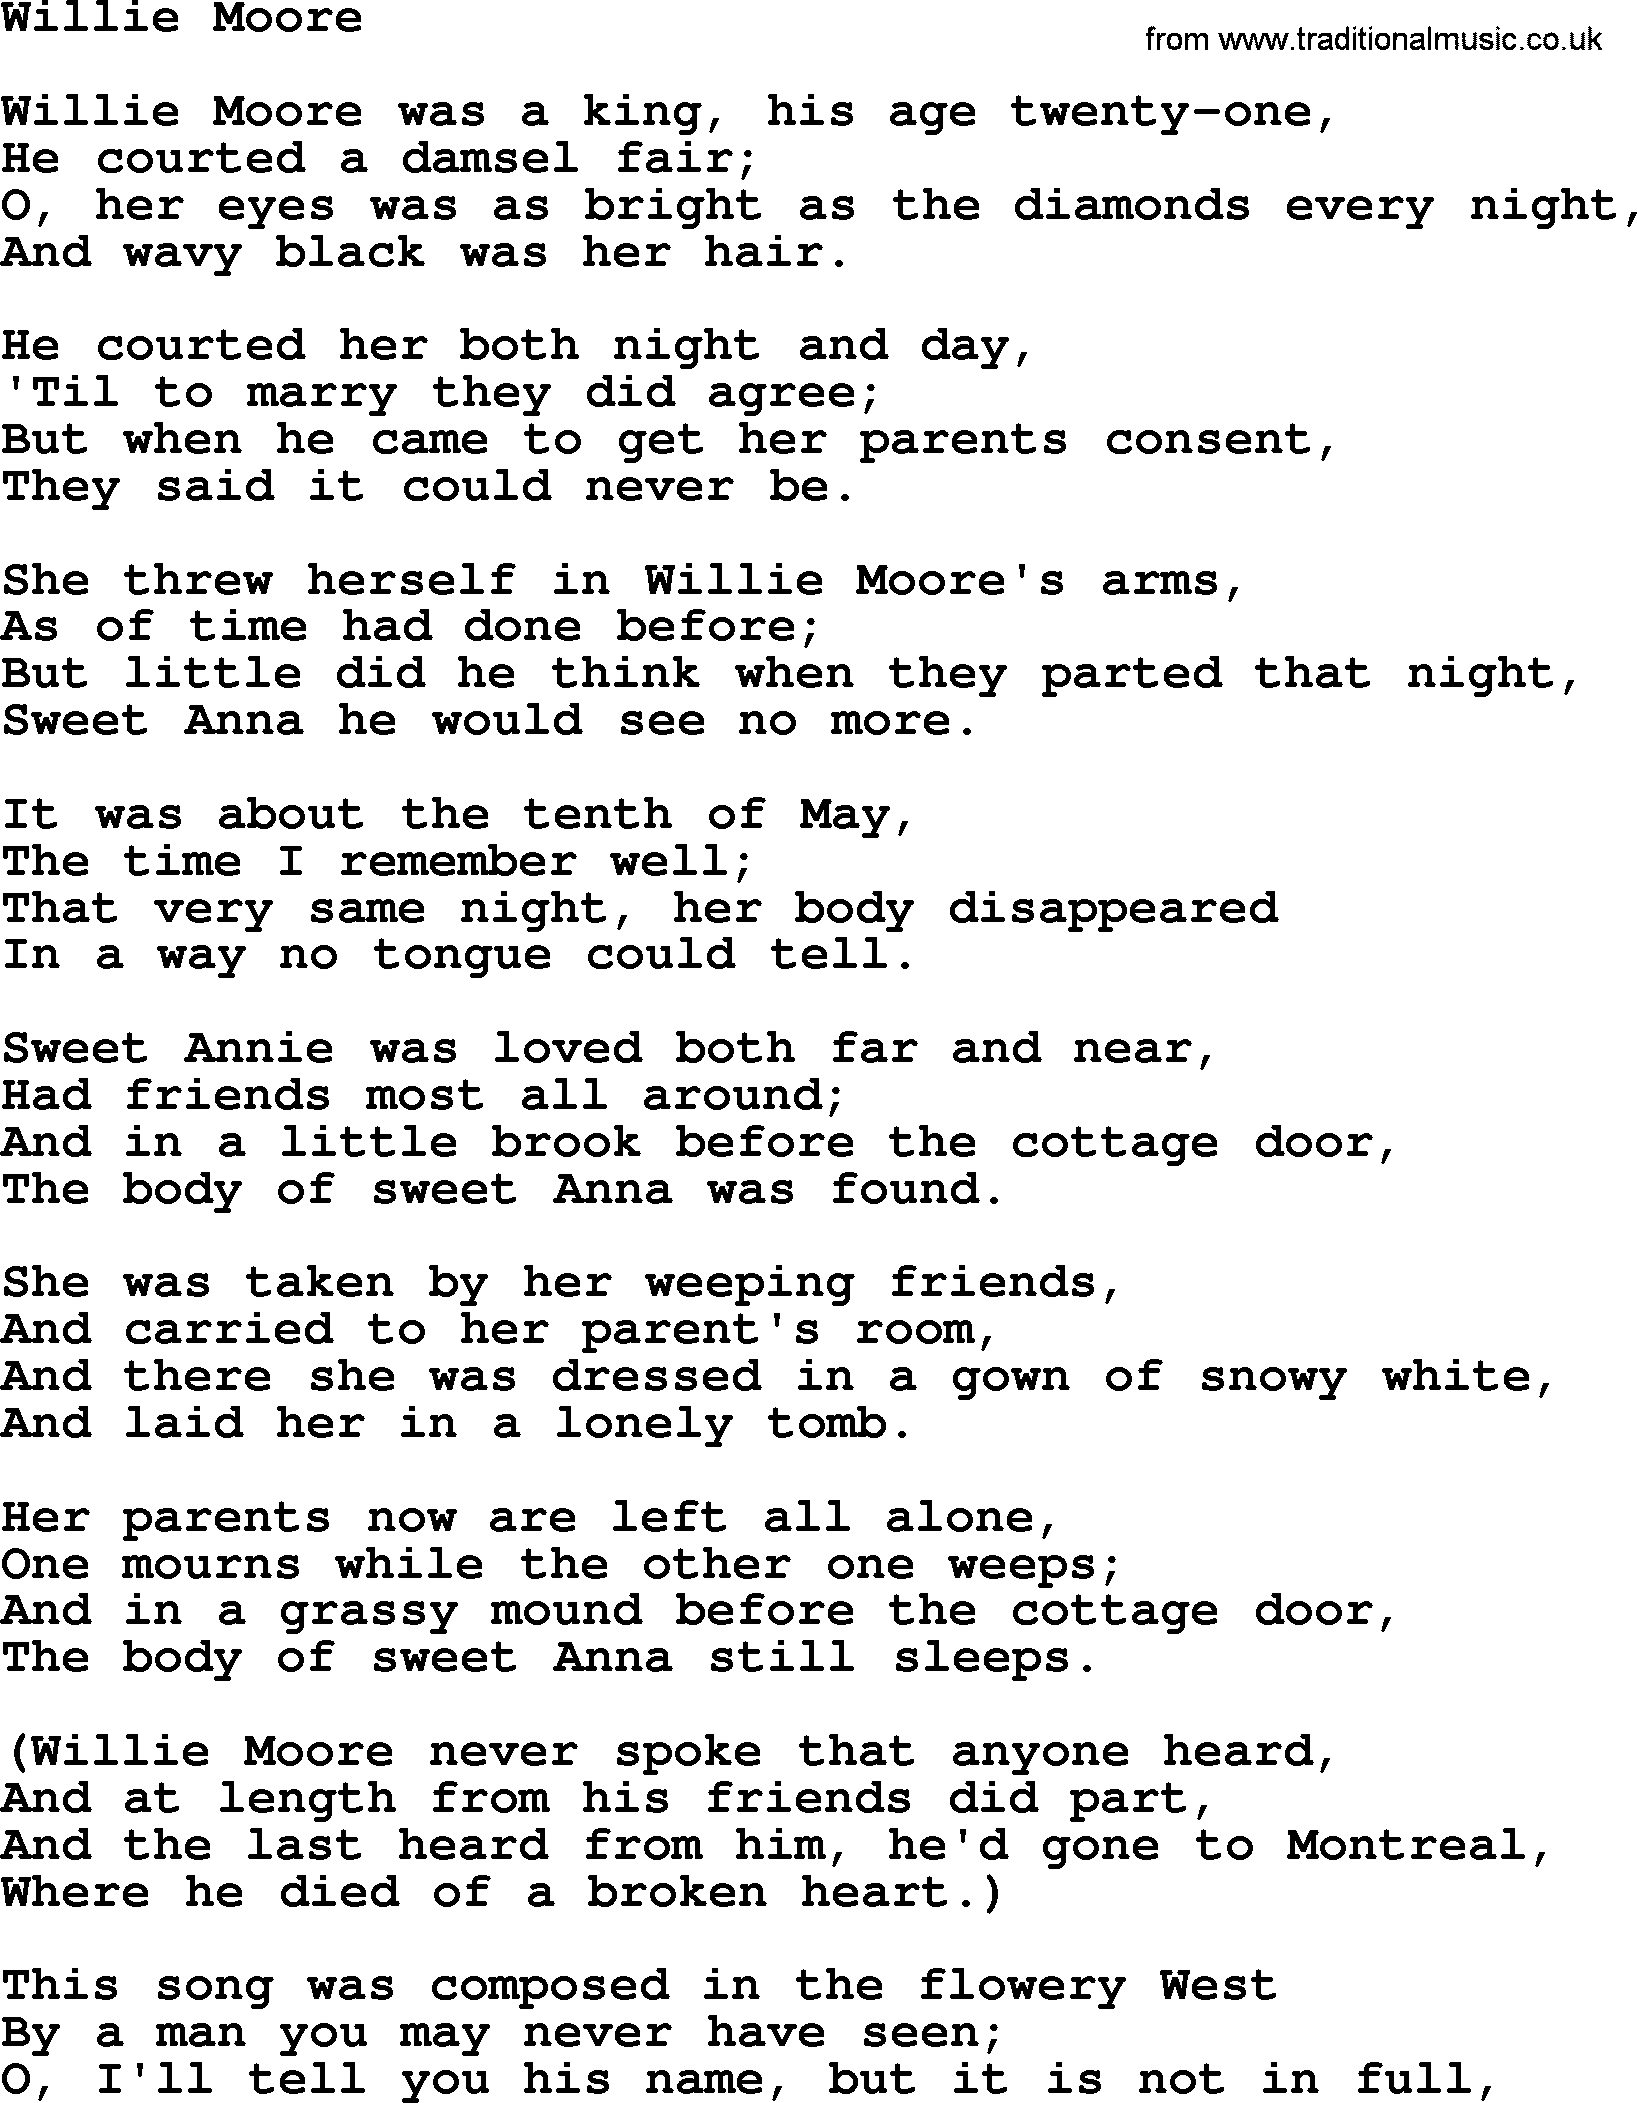 Joan Baez song Willie Moore, lyrics